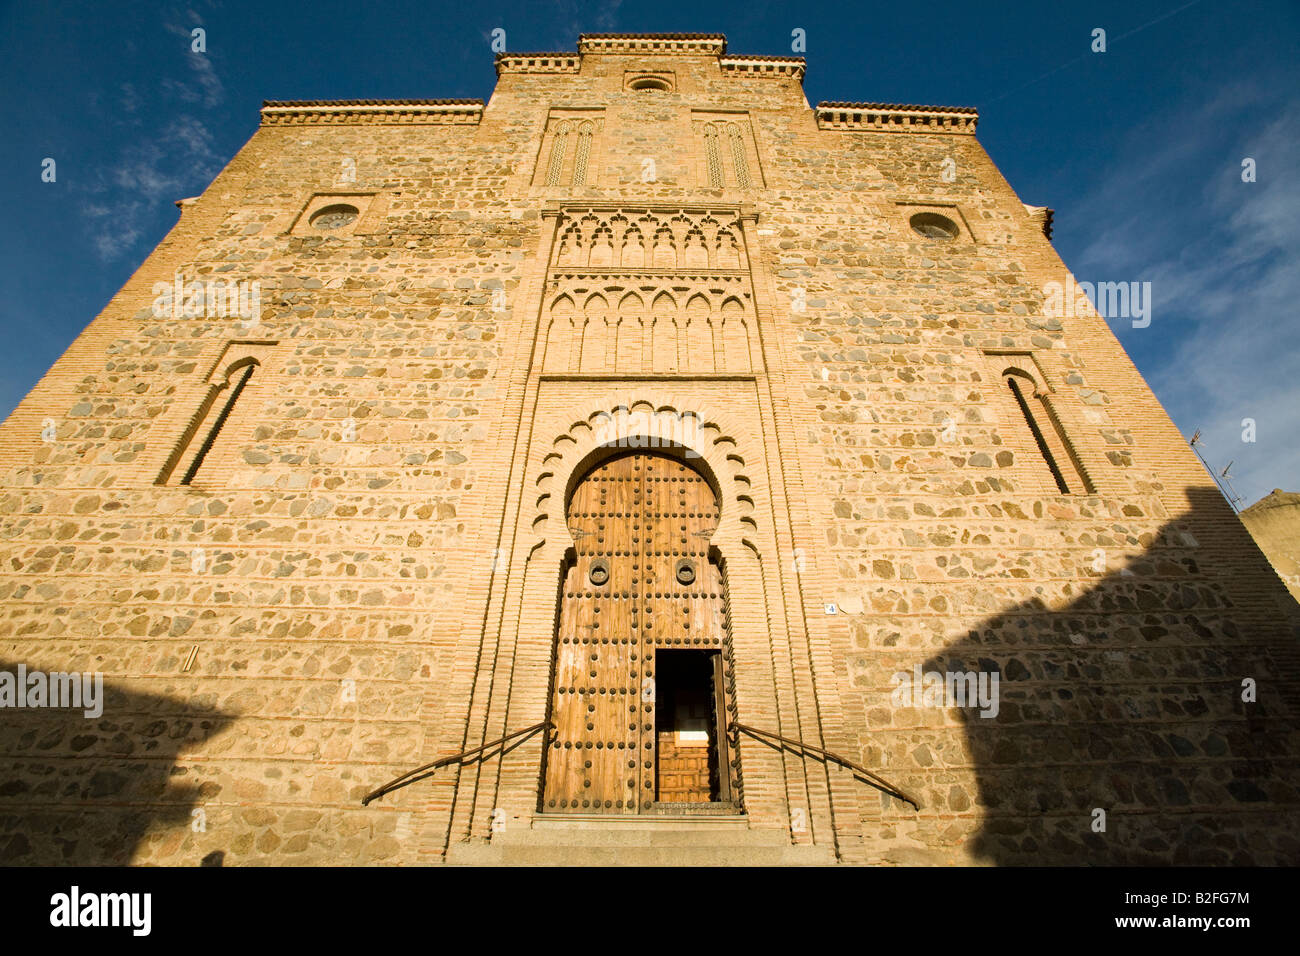 España Toledo detalle arquitectónico morisco en la Igelsia de Santiago de Arrobal mudéjar de arco de entrada a la iglesia del siglo XIII. Foto de stock